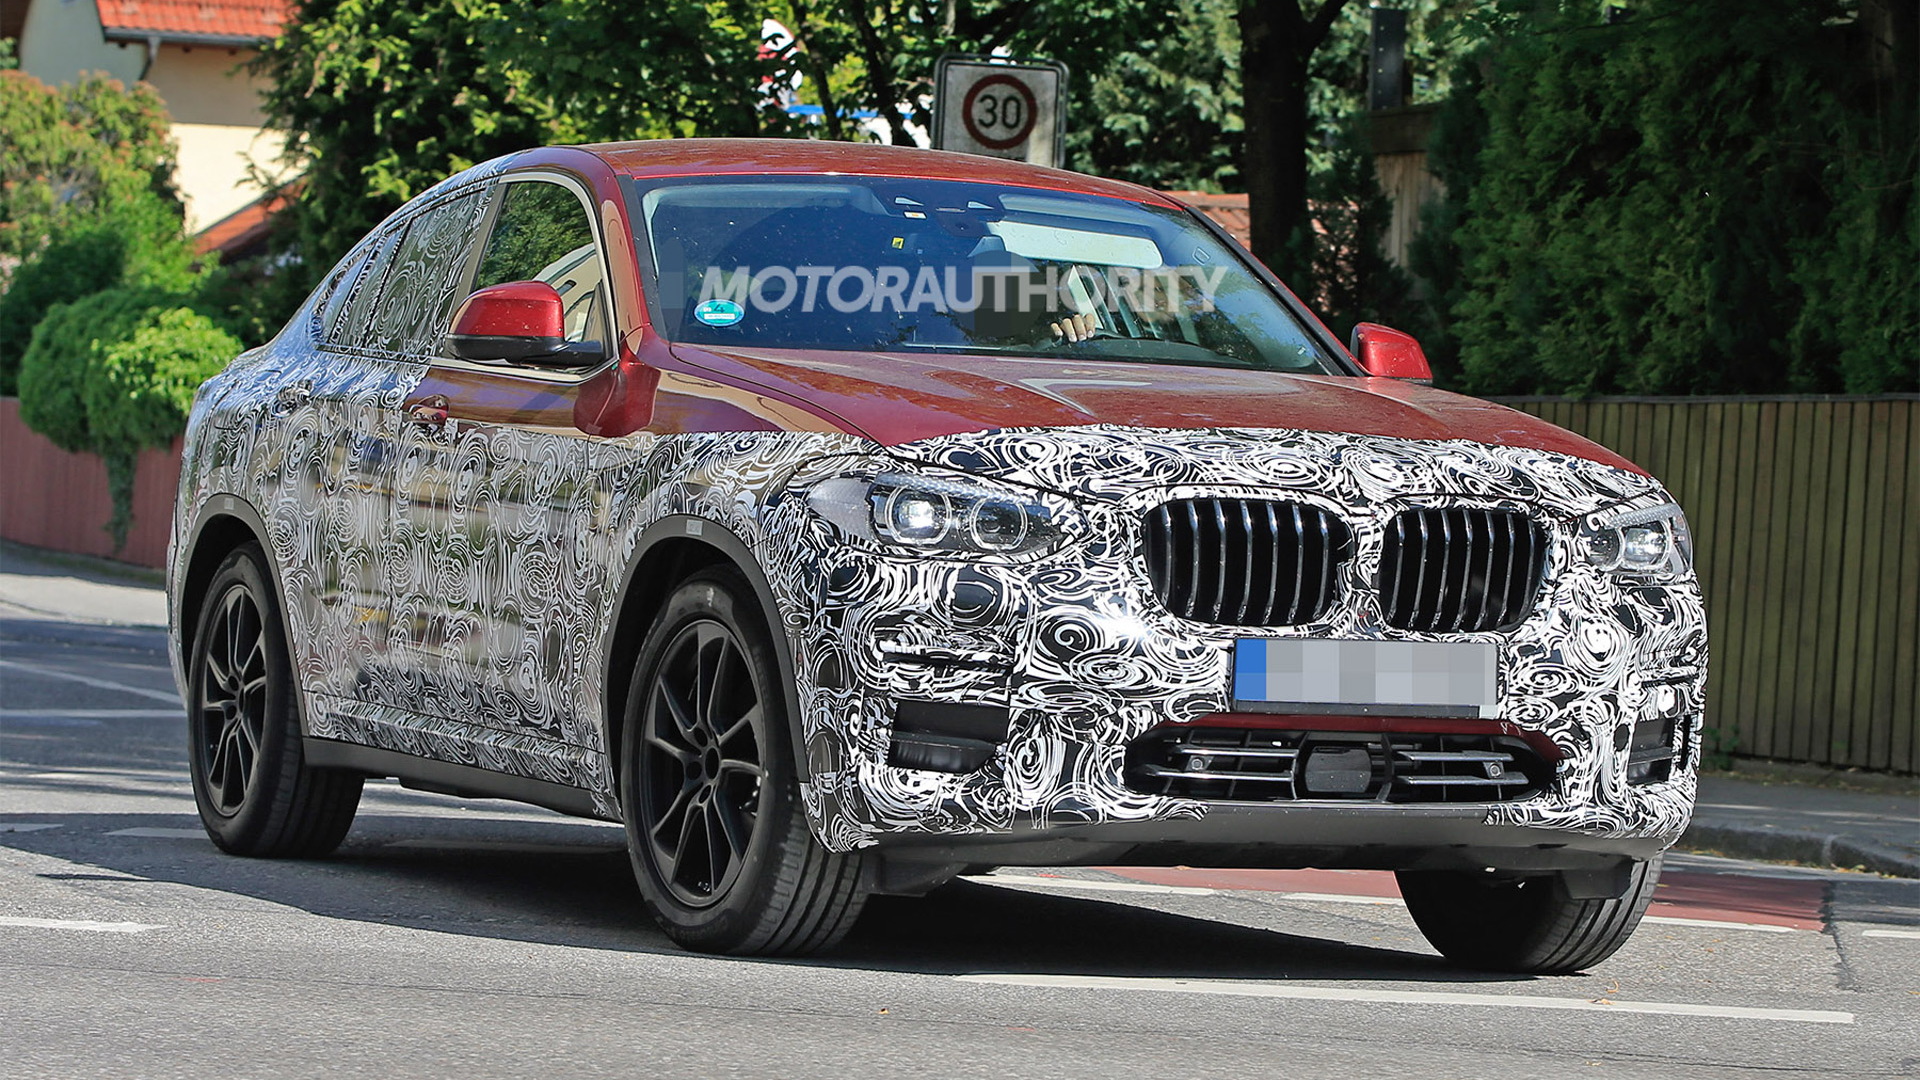 2019 BMW X4 spy shots - Image via S. Baldauf/SB-Medien